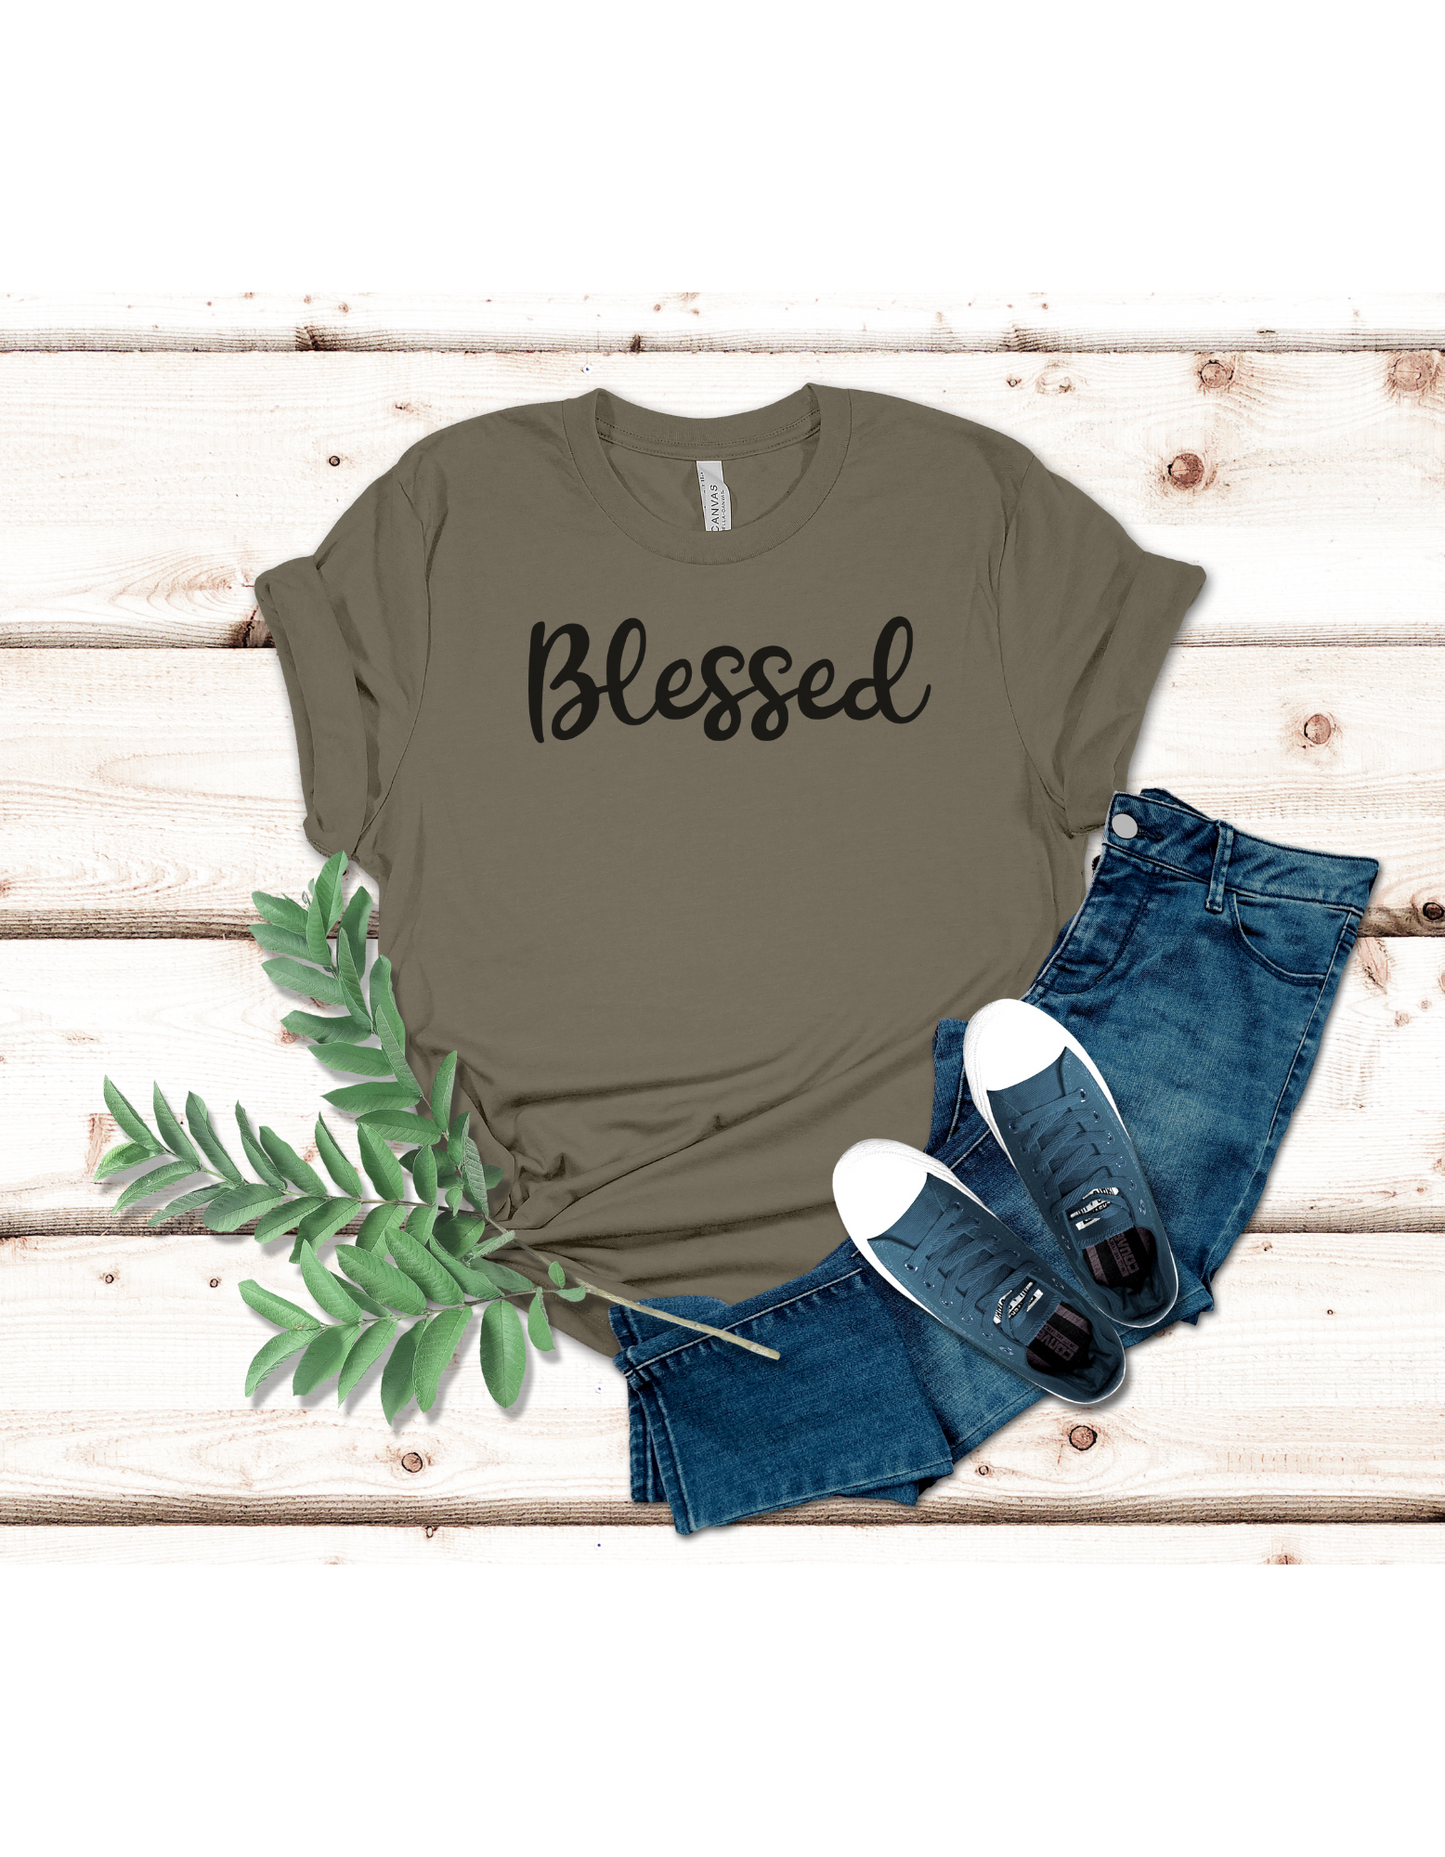 Blessed Tshirt, Faith Shirt, Christian Tee